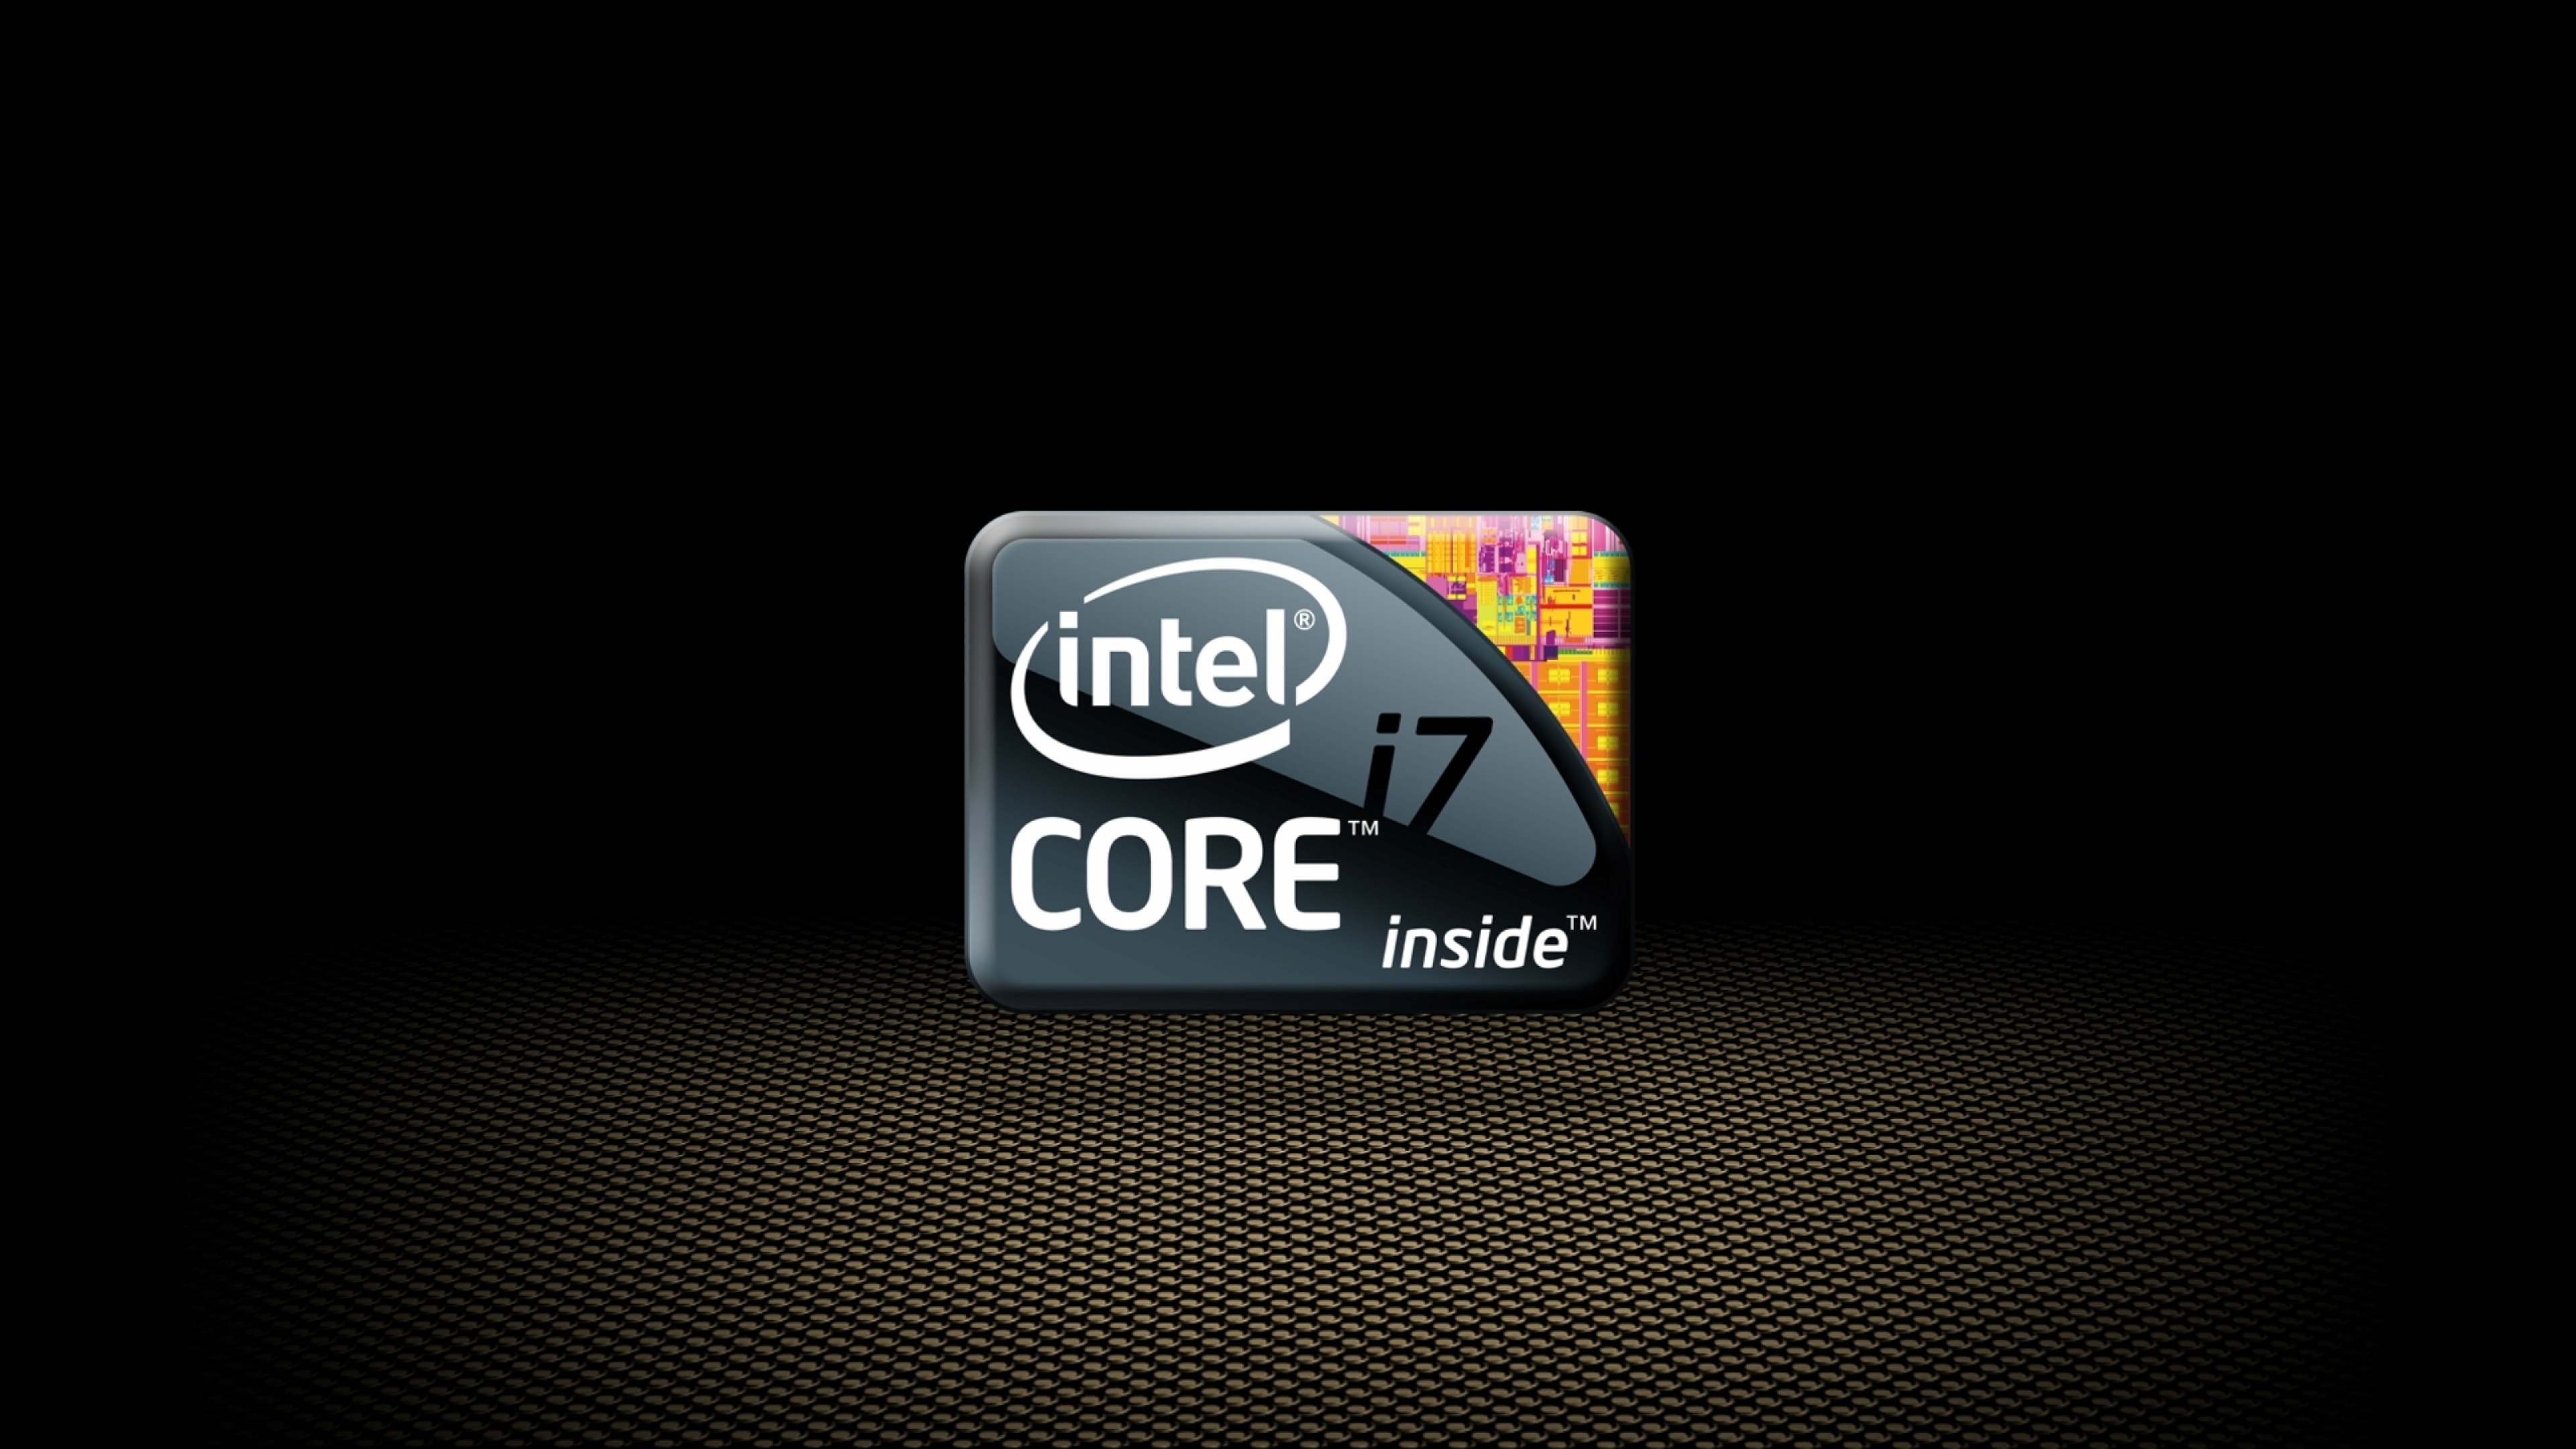 Intel Processor Gray Black I7 Wallpaper Background 4k Ultra HD